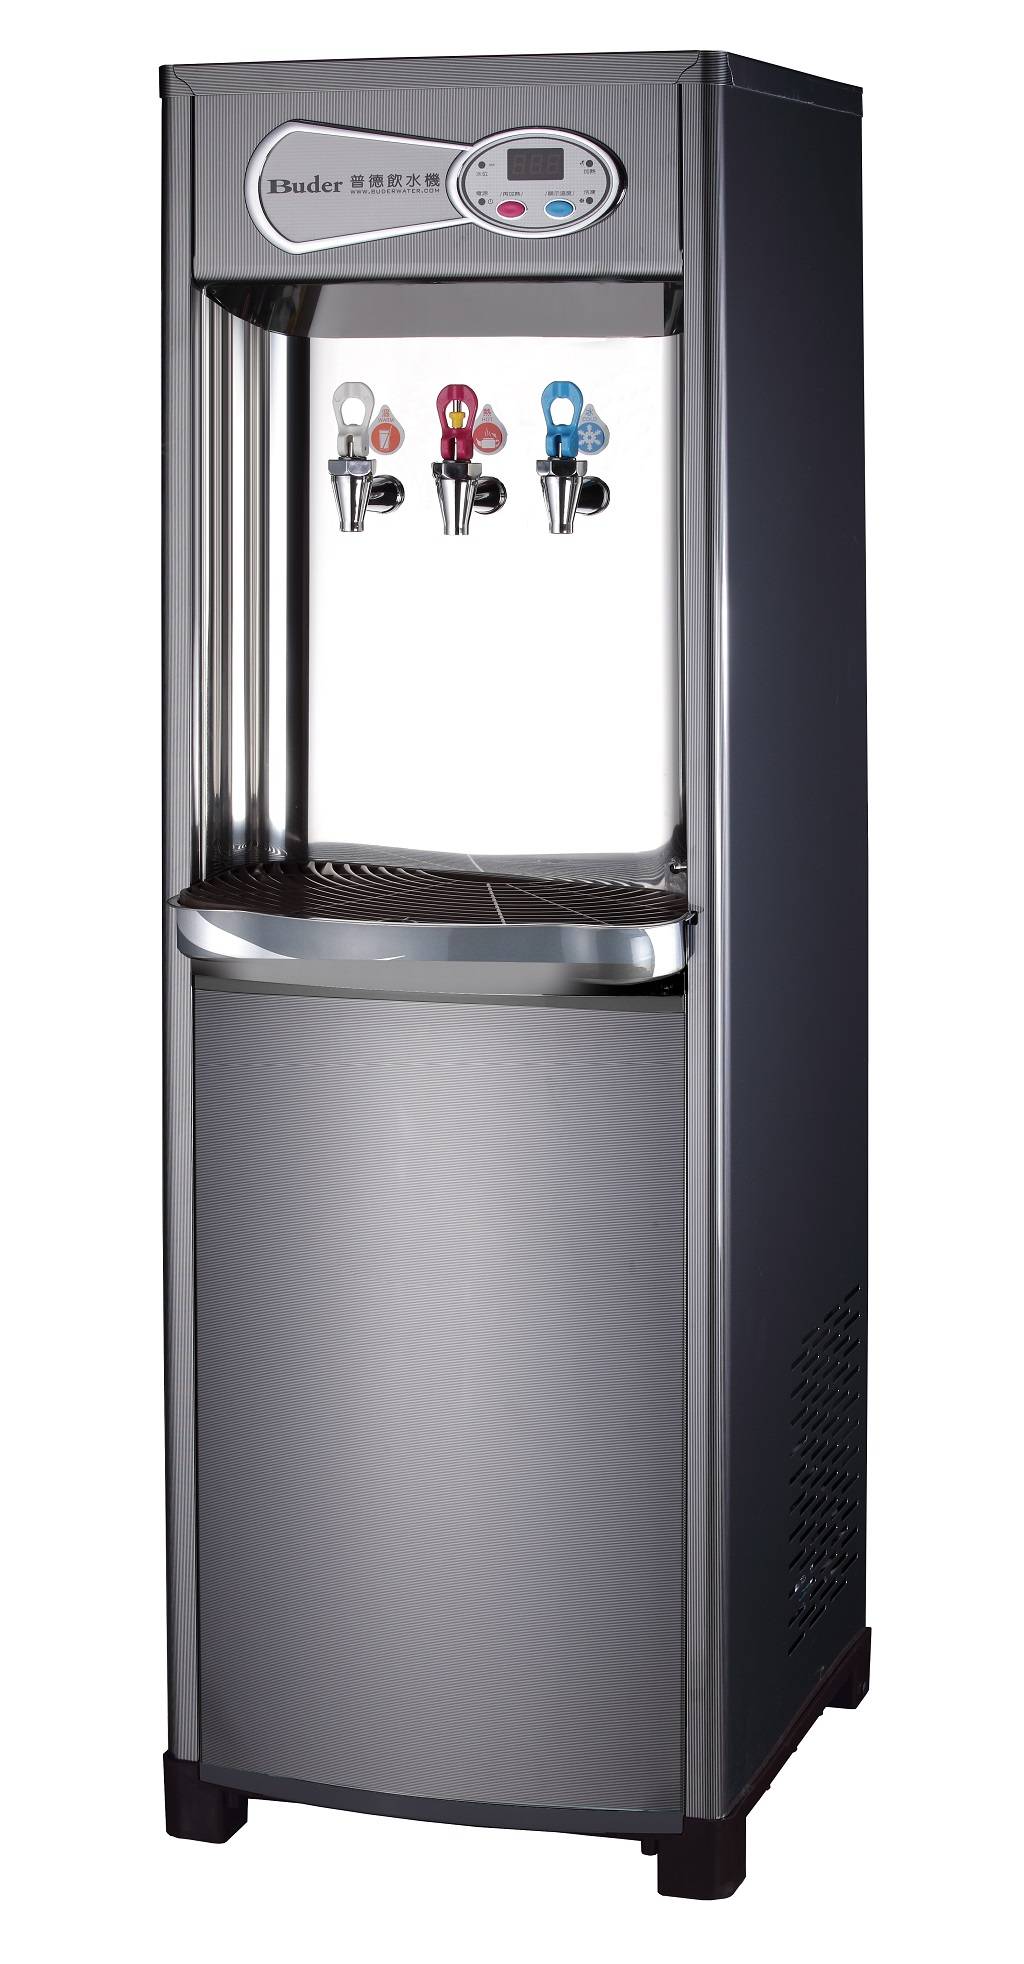 BD-5035 普德冰溫熱數位式落地型飲水機